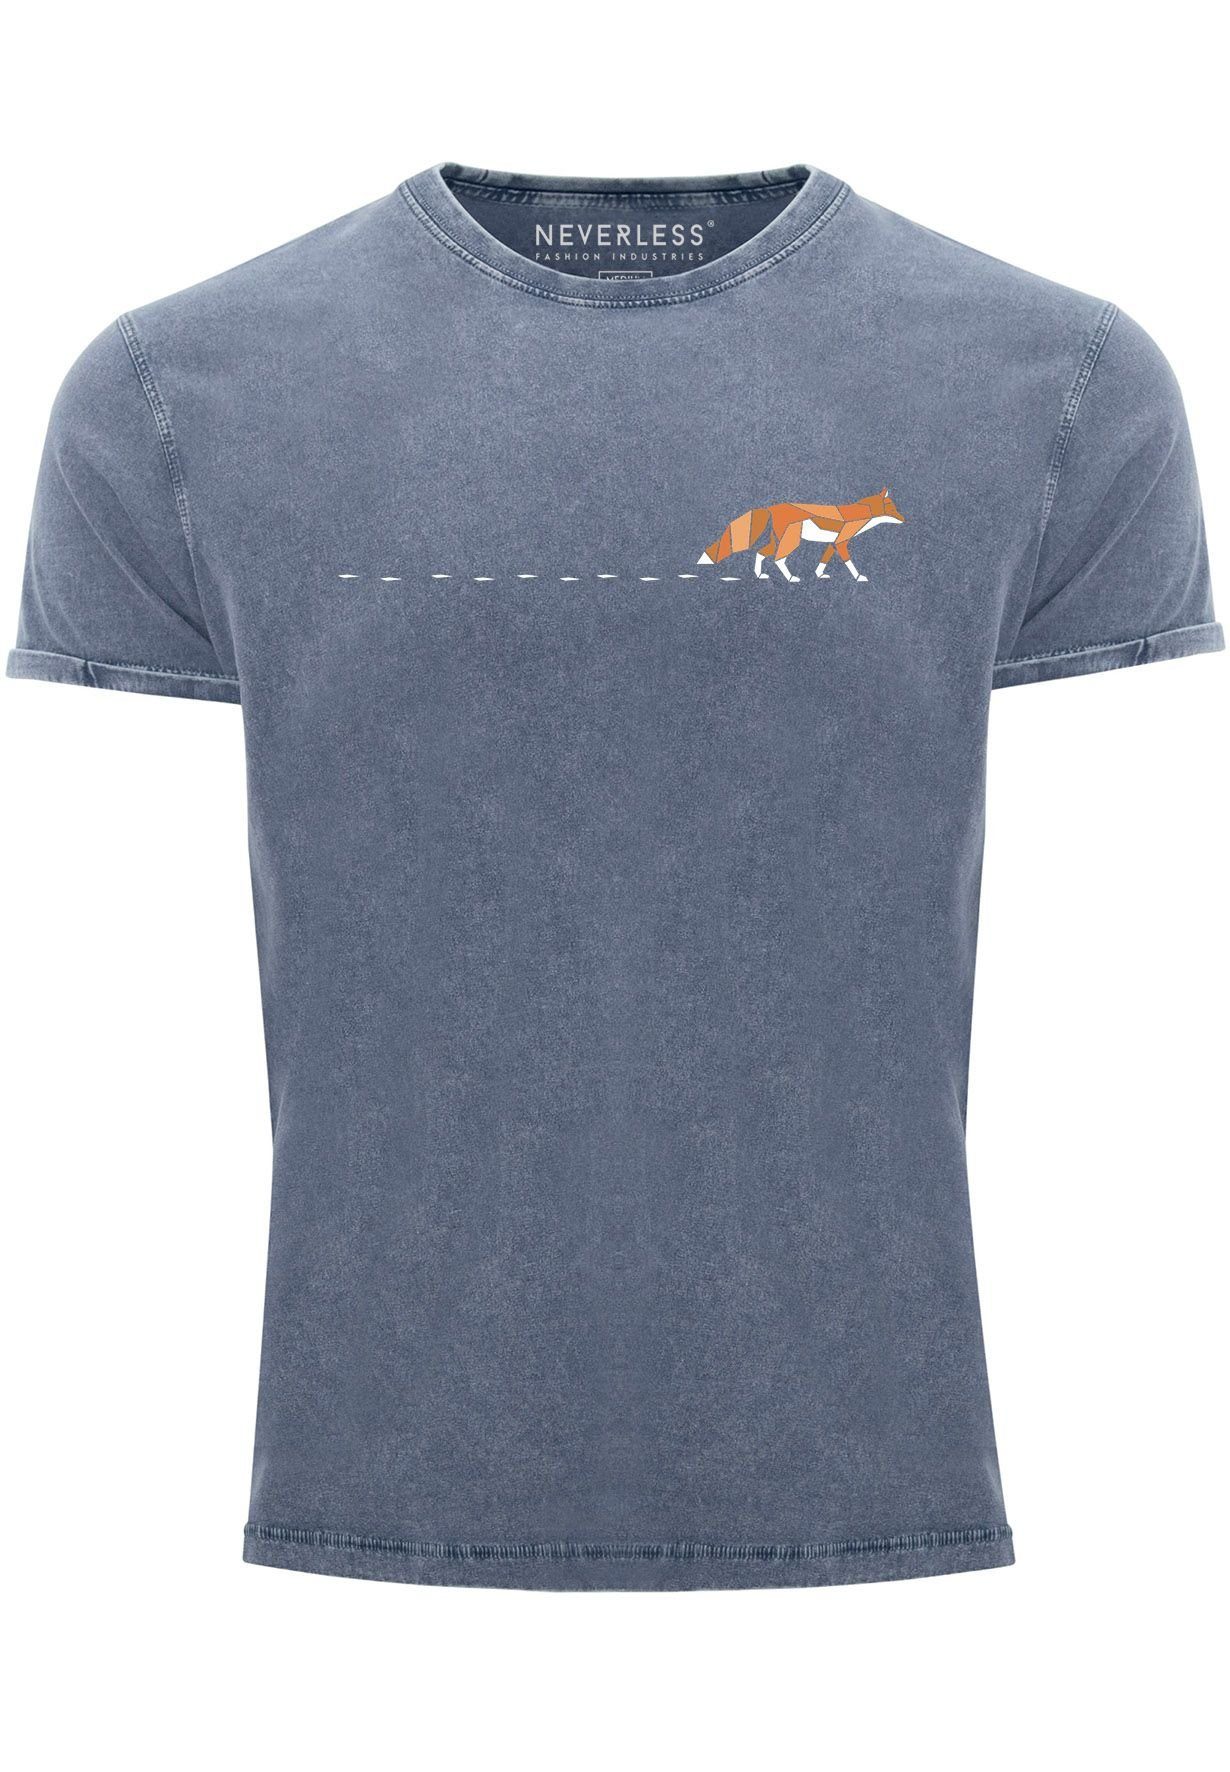 Neverless Print-Shirt Herren T-Shirt Vintage Fuchs Fox Wald Tiermotiv Logo Print Badge Fashi mit Print blau